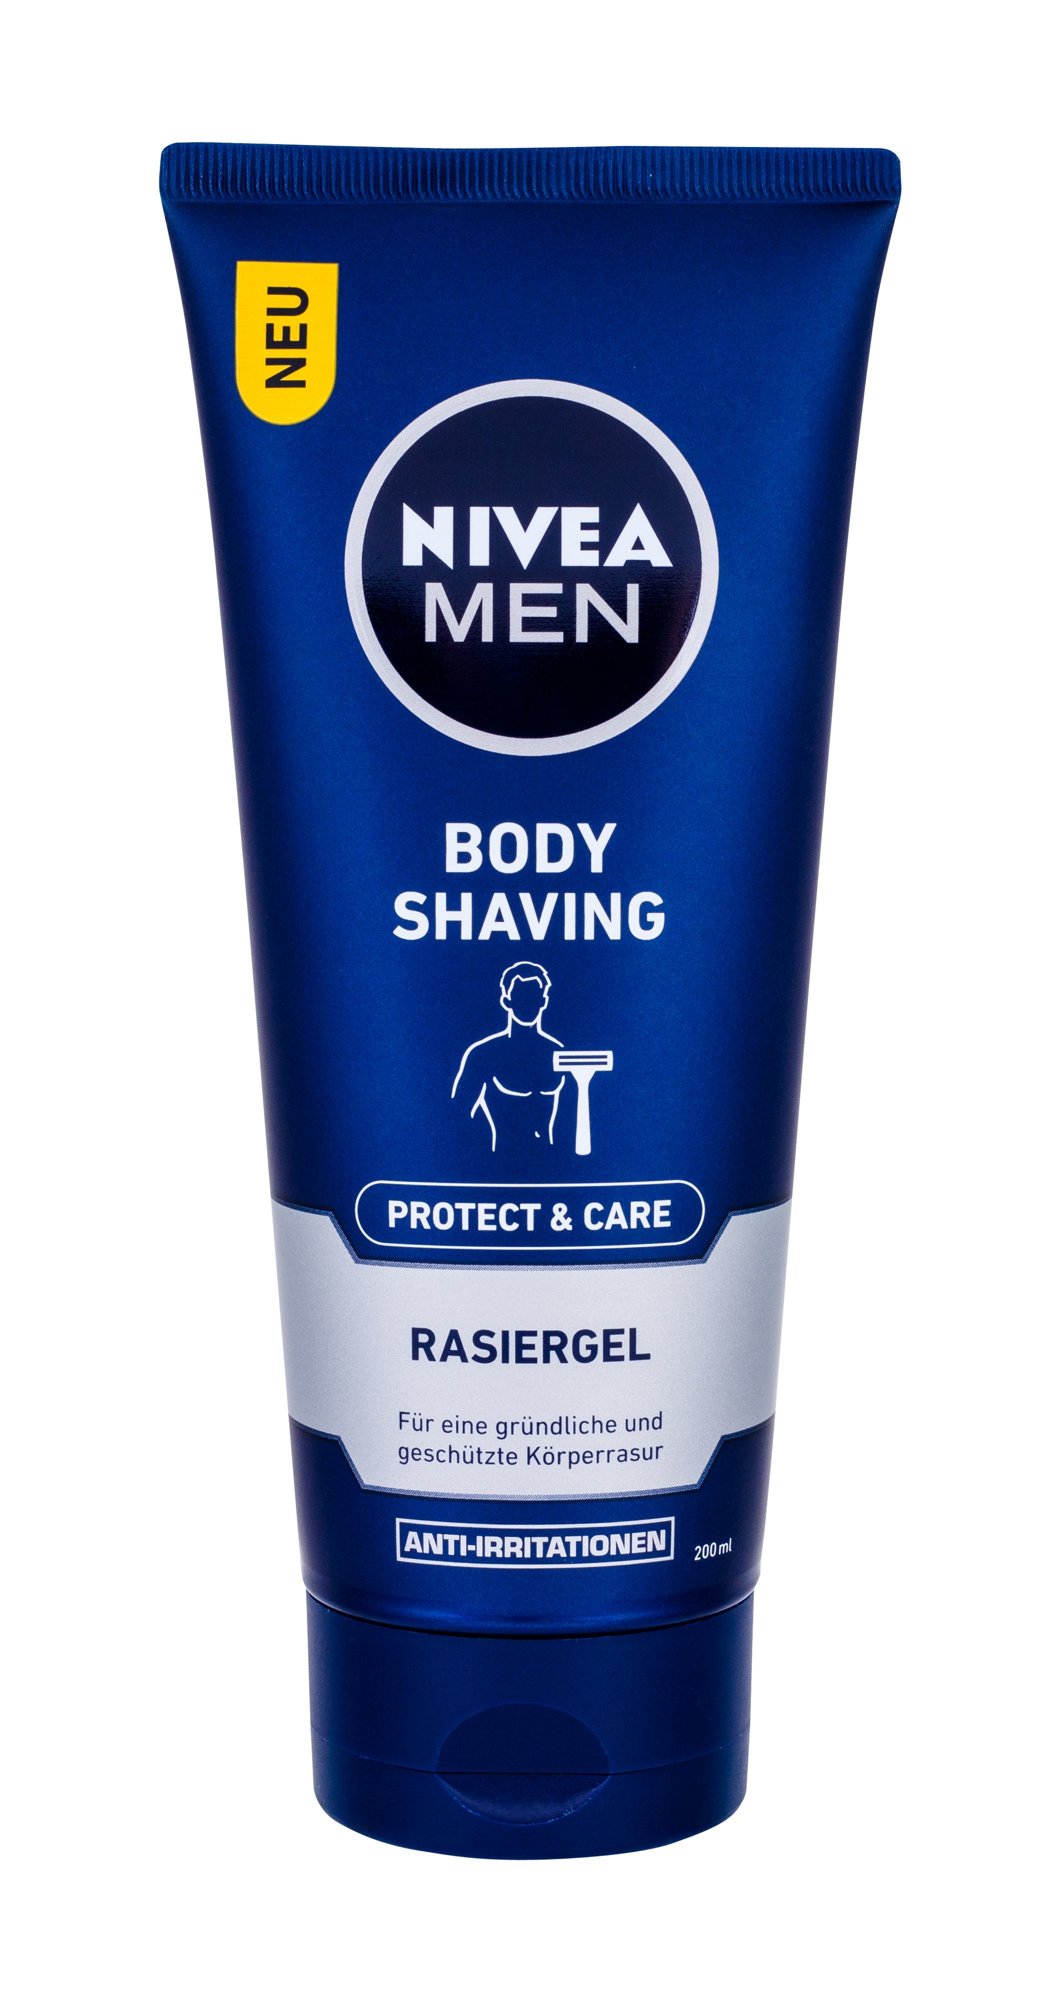 Nivea Men Protect & Care Body Shaving 200ml skutimosi gelis